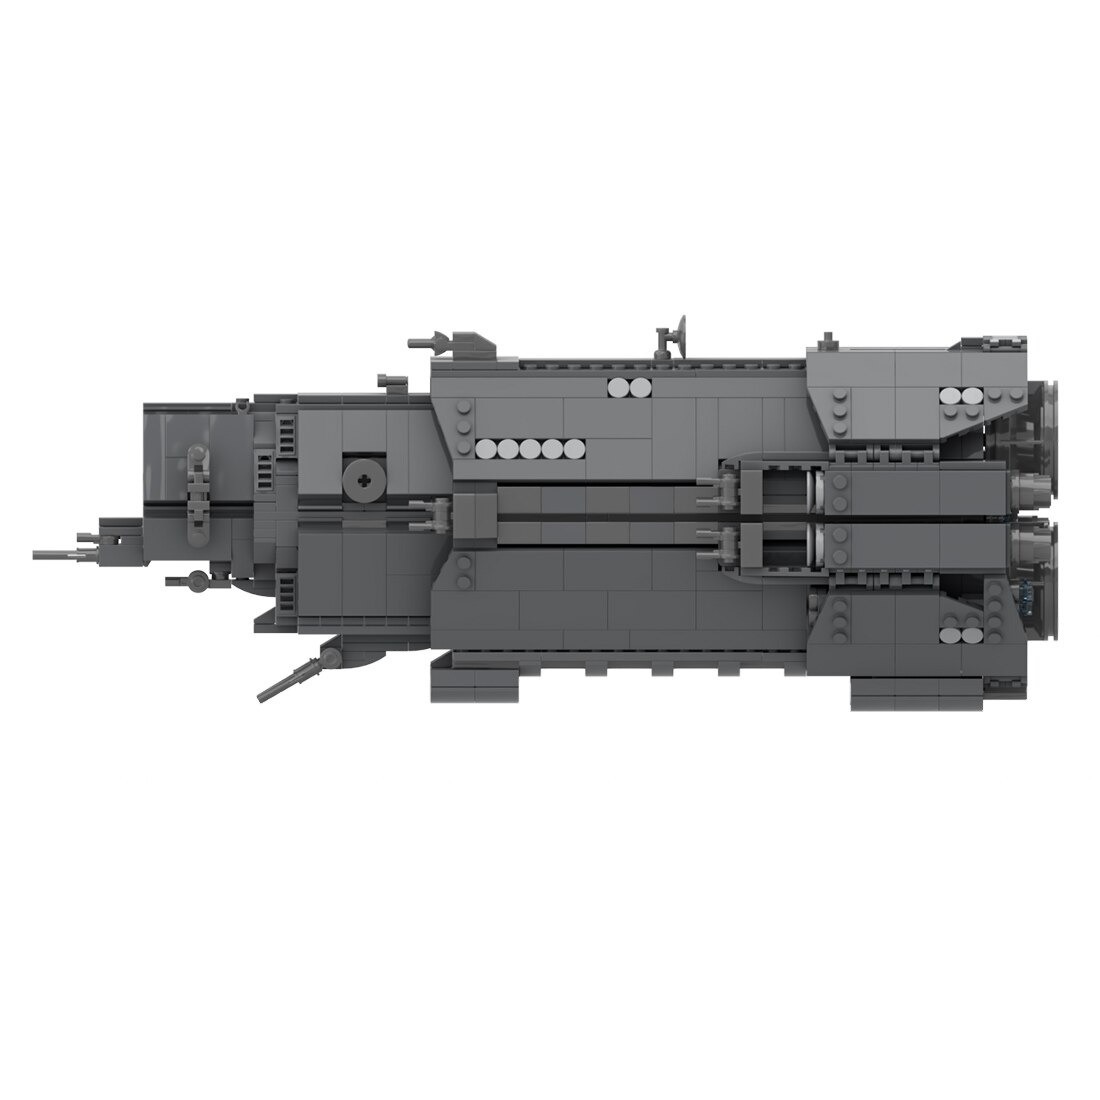 authorized moc 38471 light cruiser model main 3 - CADA Block